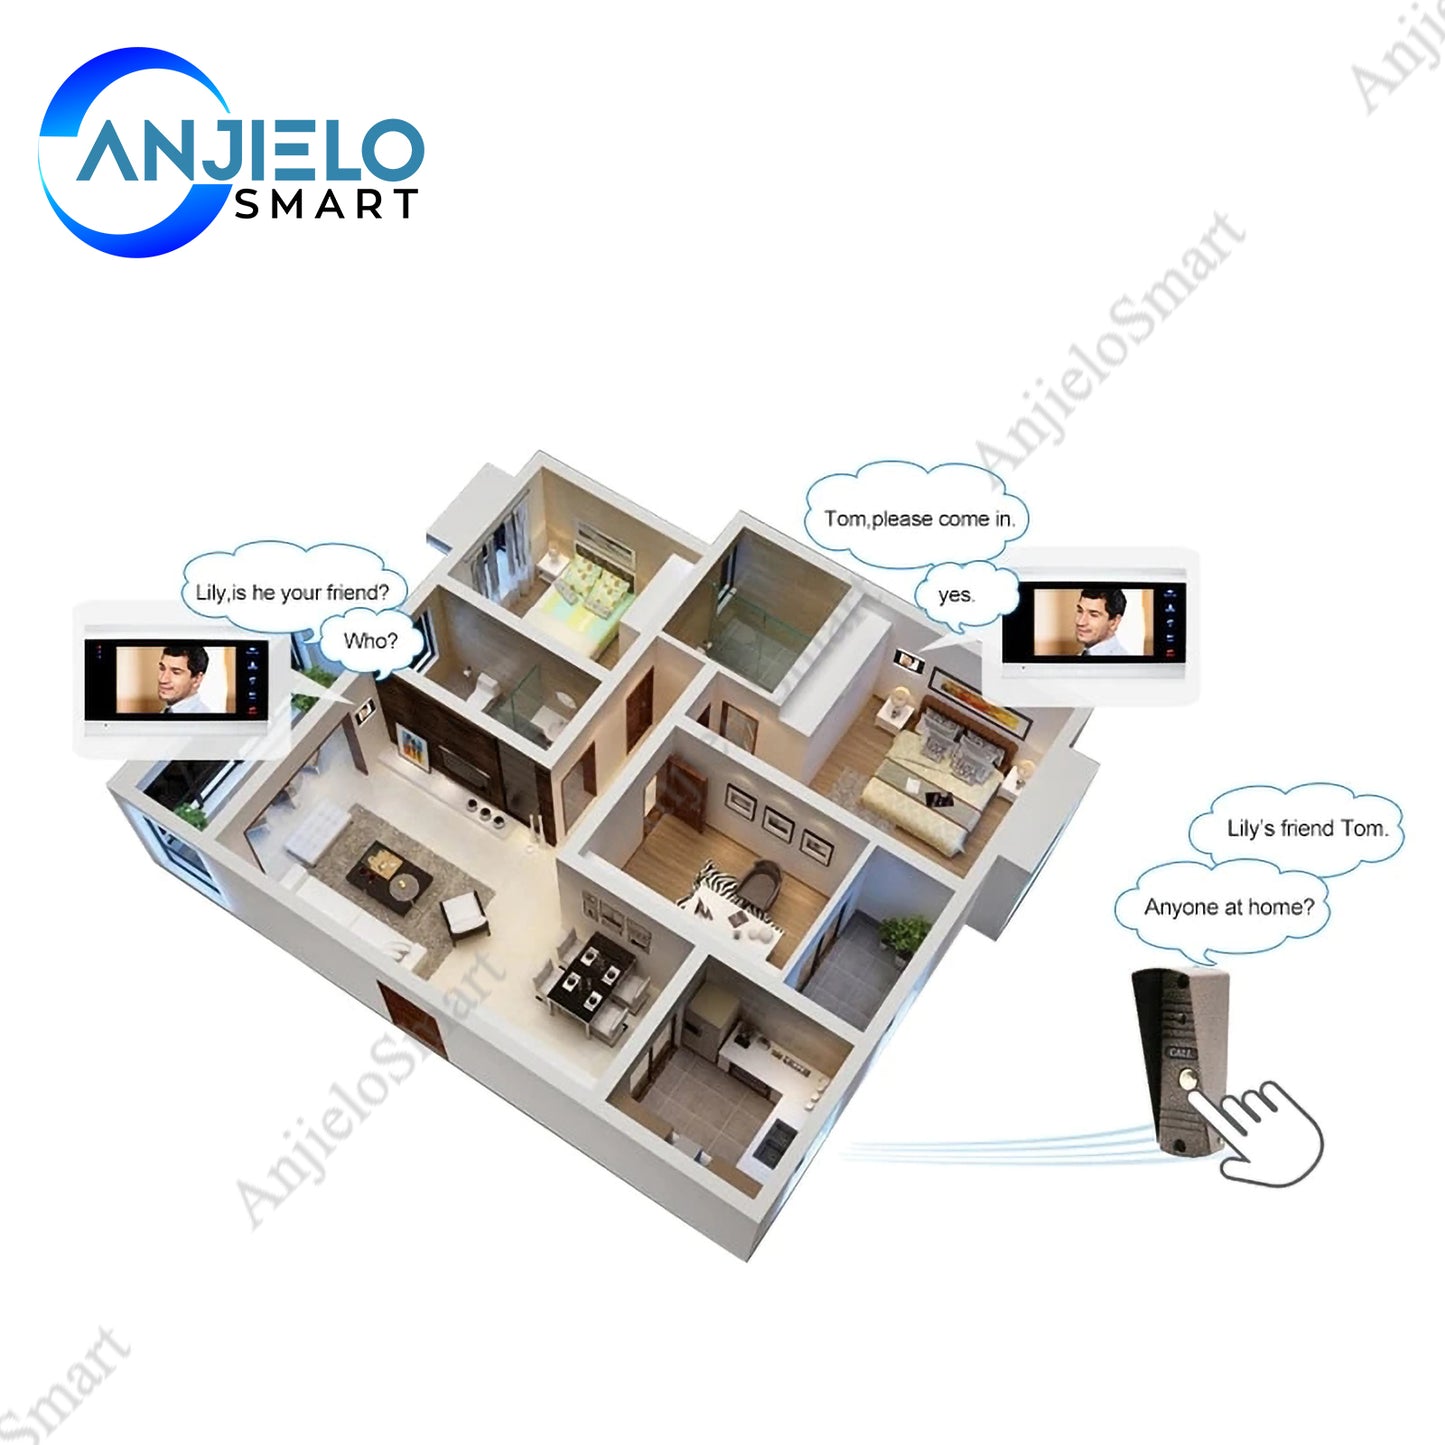 AnjieloSmart 7 inch Monitor 1200TVL Doorbell Camera Video Intercom System Motion Detection Access Control